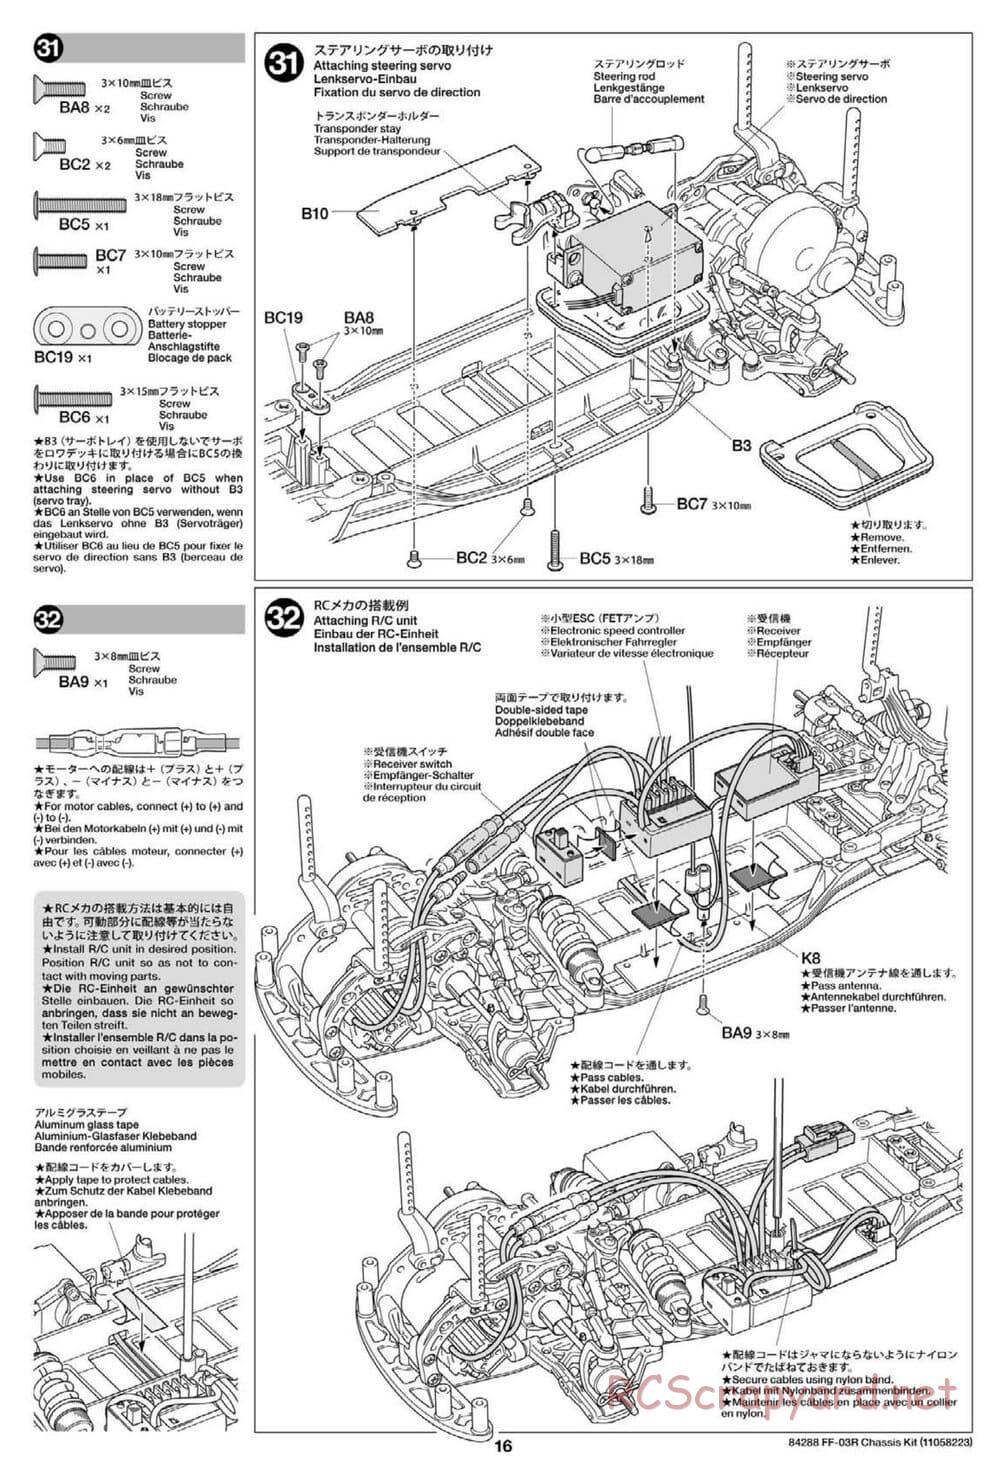 Tamiya - FF-03R Chassis - Manual - Page 18